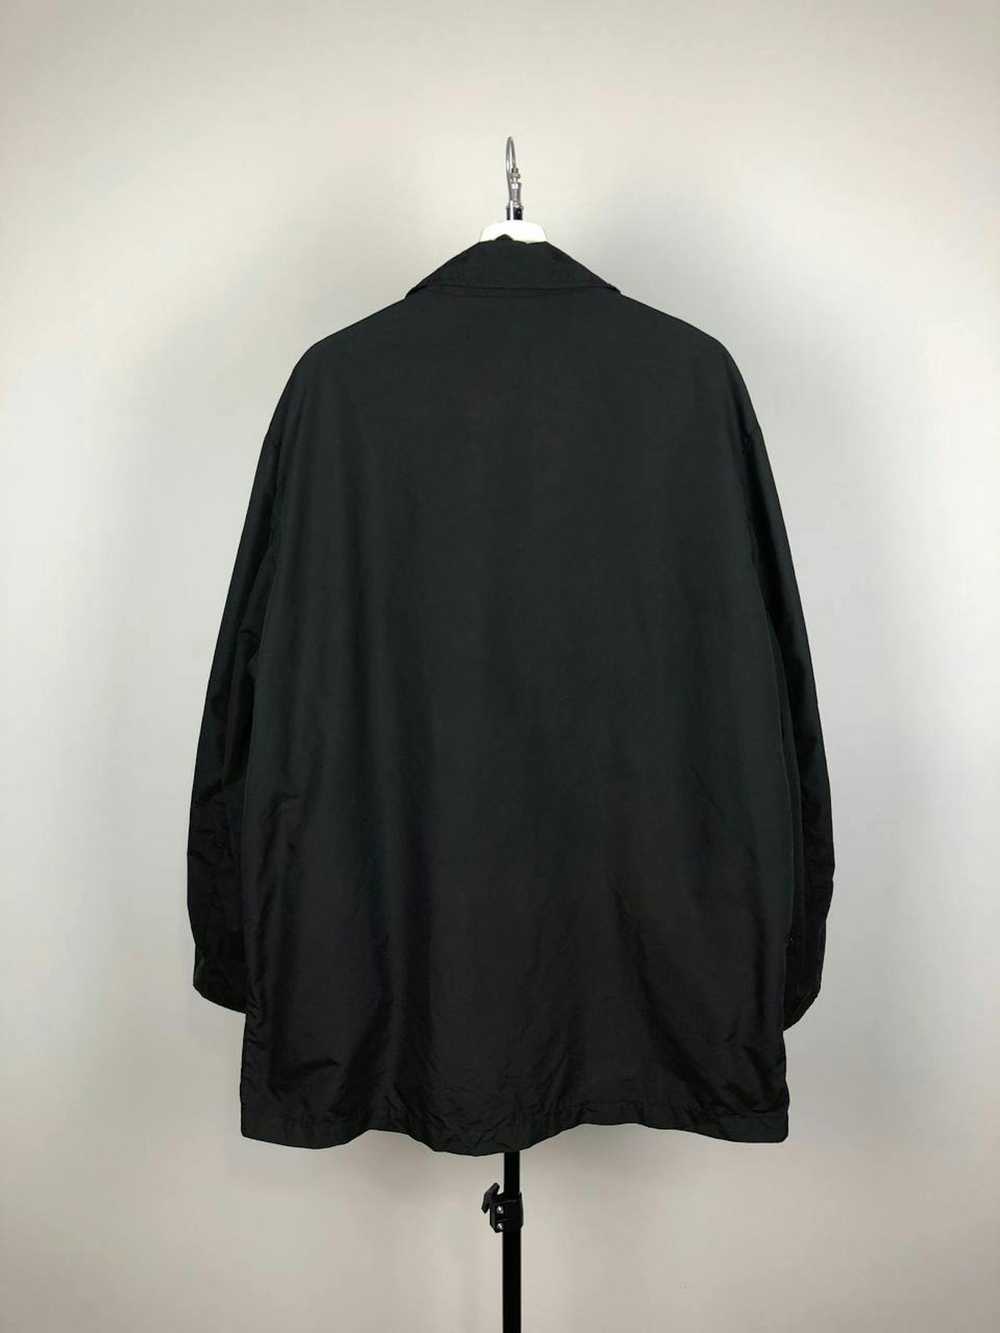 Cerruti 1881 Cerutti 1881 Vintage Jacket Black si… - image 9